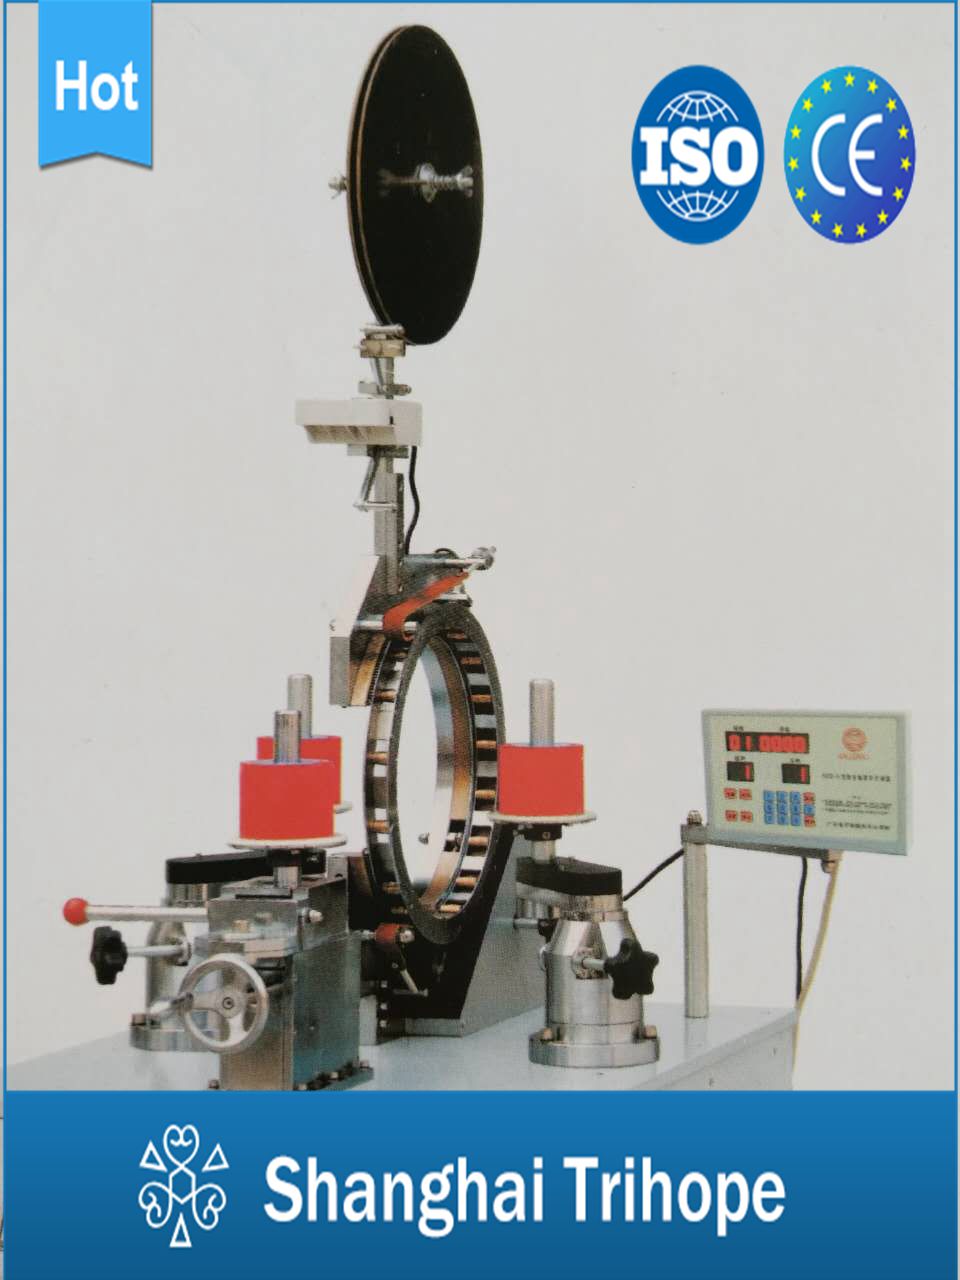 अच्छी गुणवत्ता वाले स्विचगियर उत्पादन उपकरण - स्वचालित इन्सुलेशन टेप मशीन - ट्राइहोप